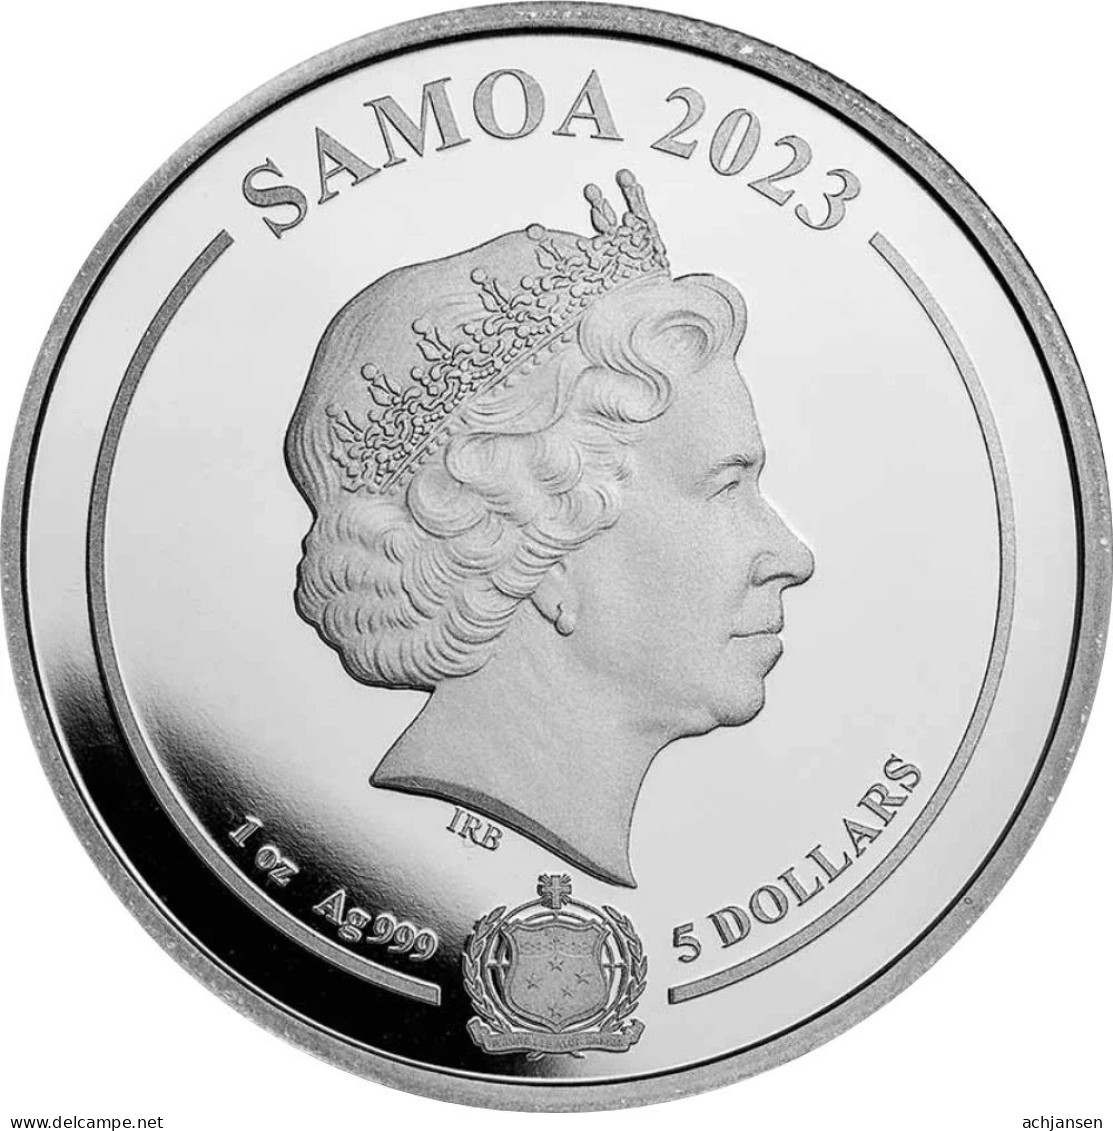 Samoa, 4 x Comics 2023 - 1 Oz. pure silver each